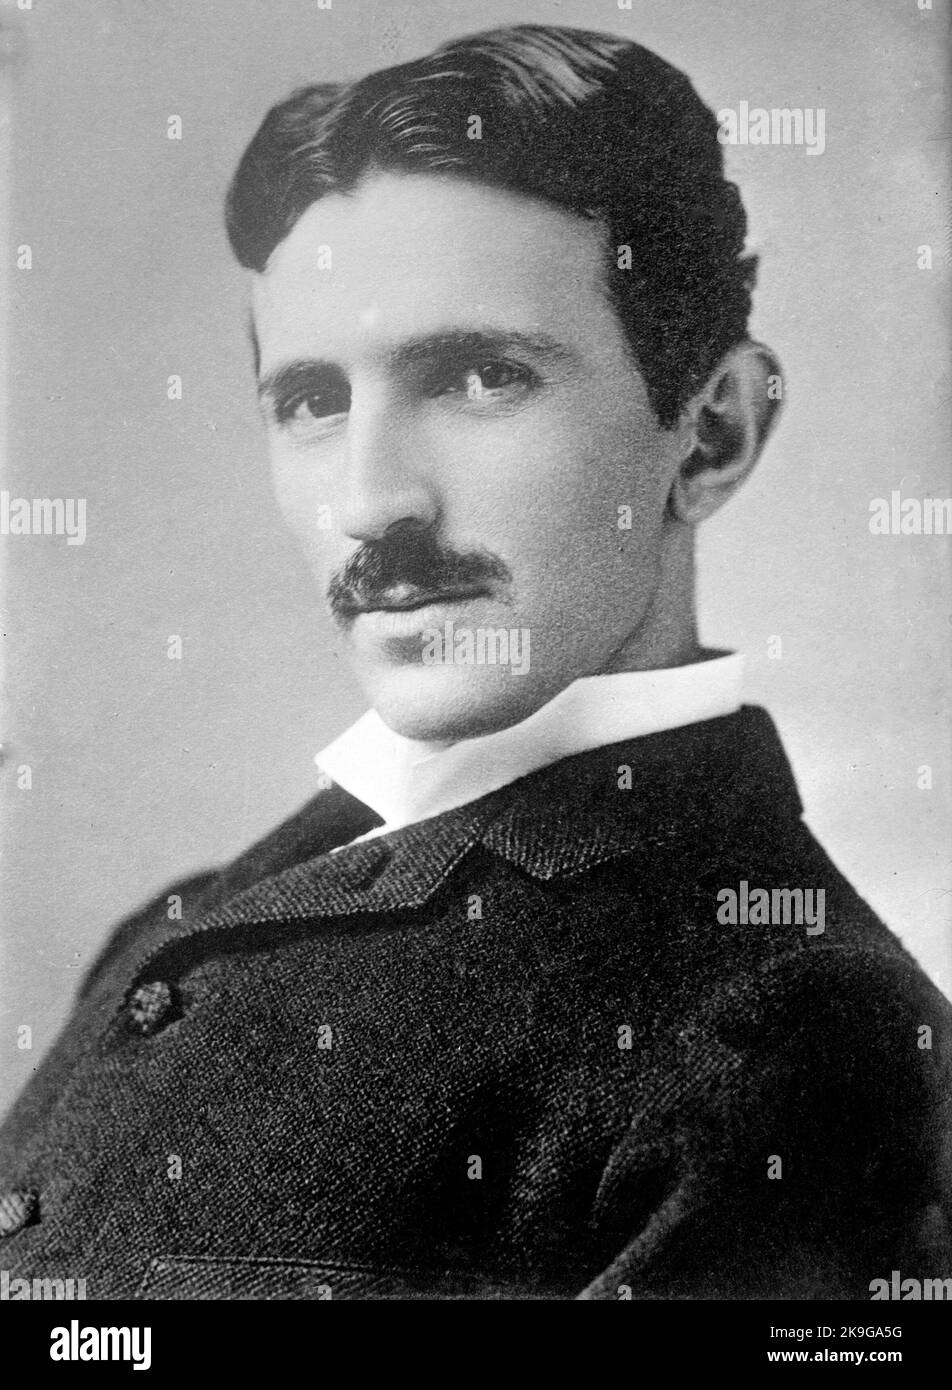 Serbian-American inventor and engineer Nikola Tesla (1856 - 1943) aged 34, circa 1890.  Photograph by Napoleon Sarony Stock Photo